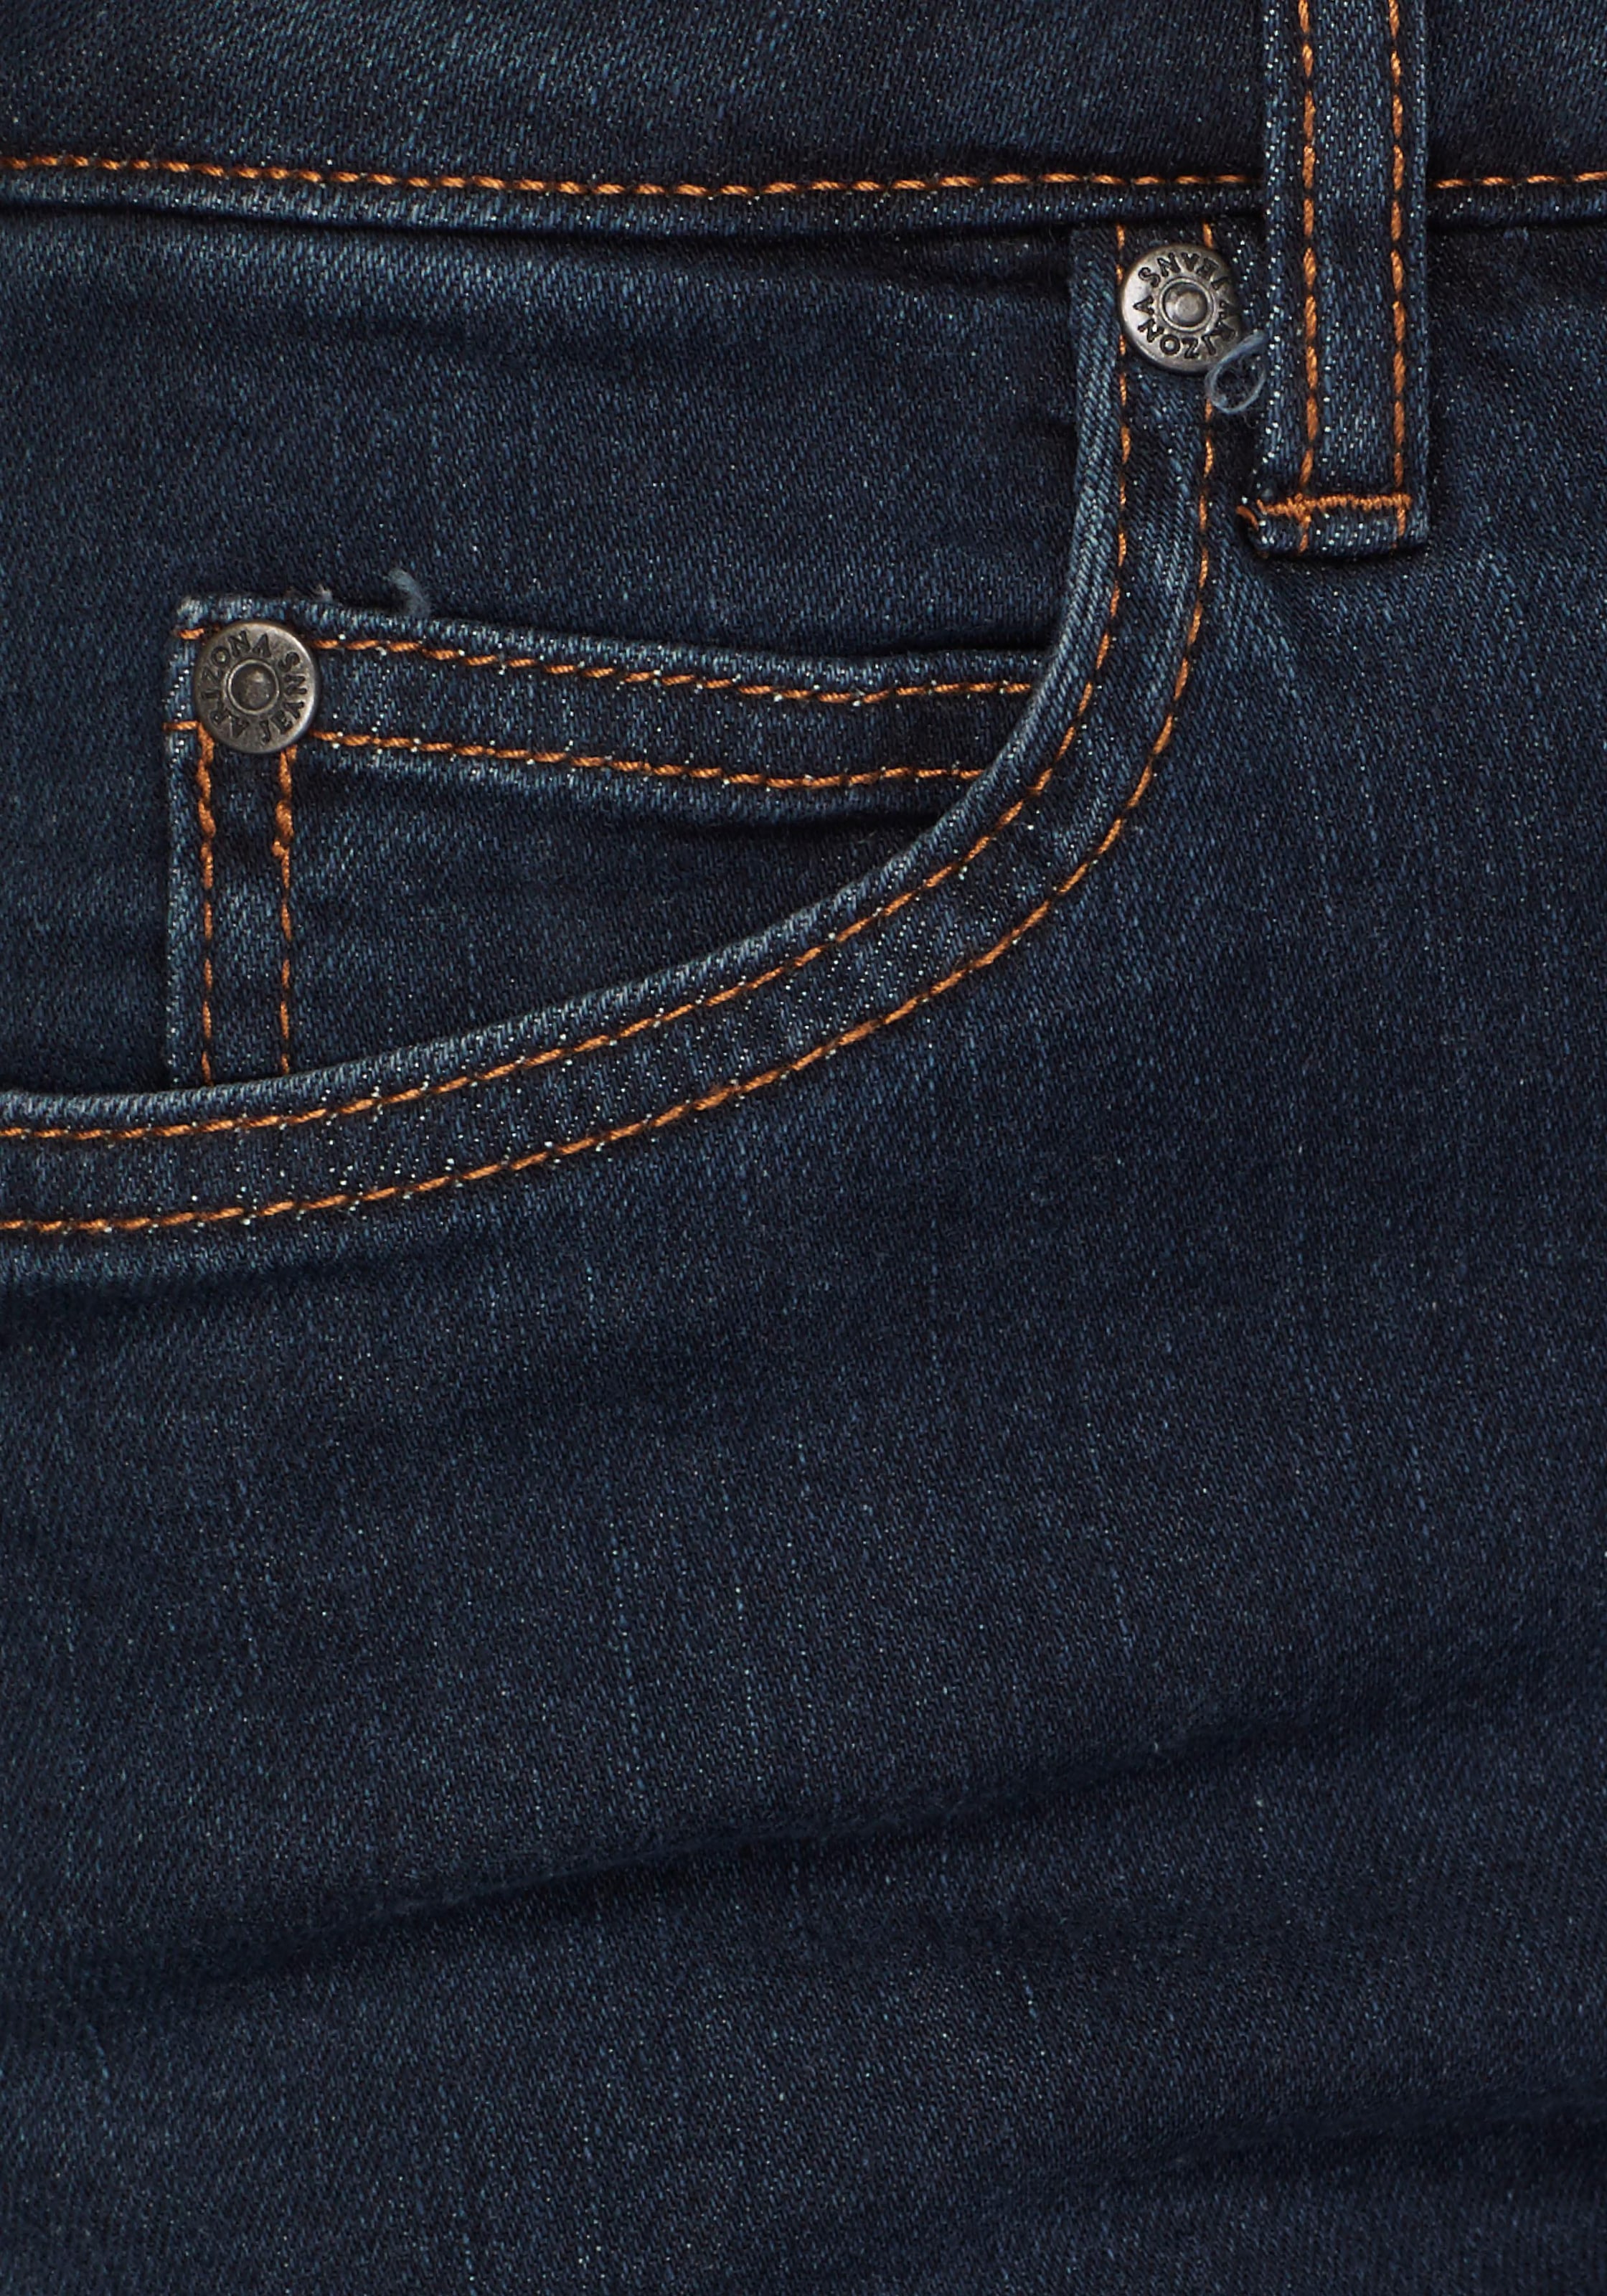 Arizona Gerade Jeans »Comfort-Fit«, High Waist